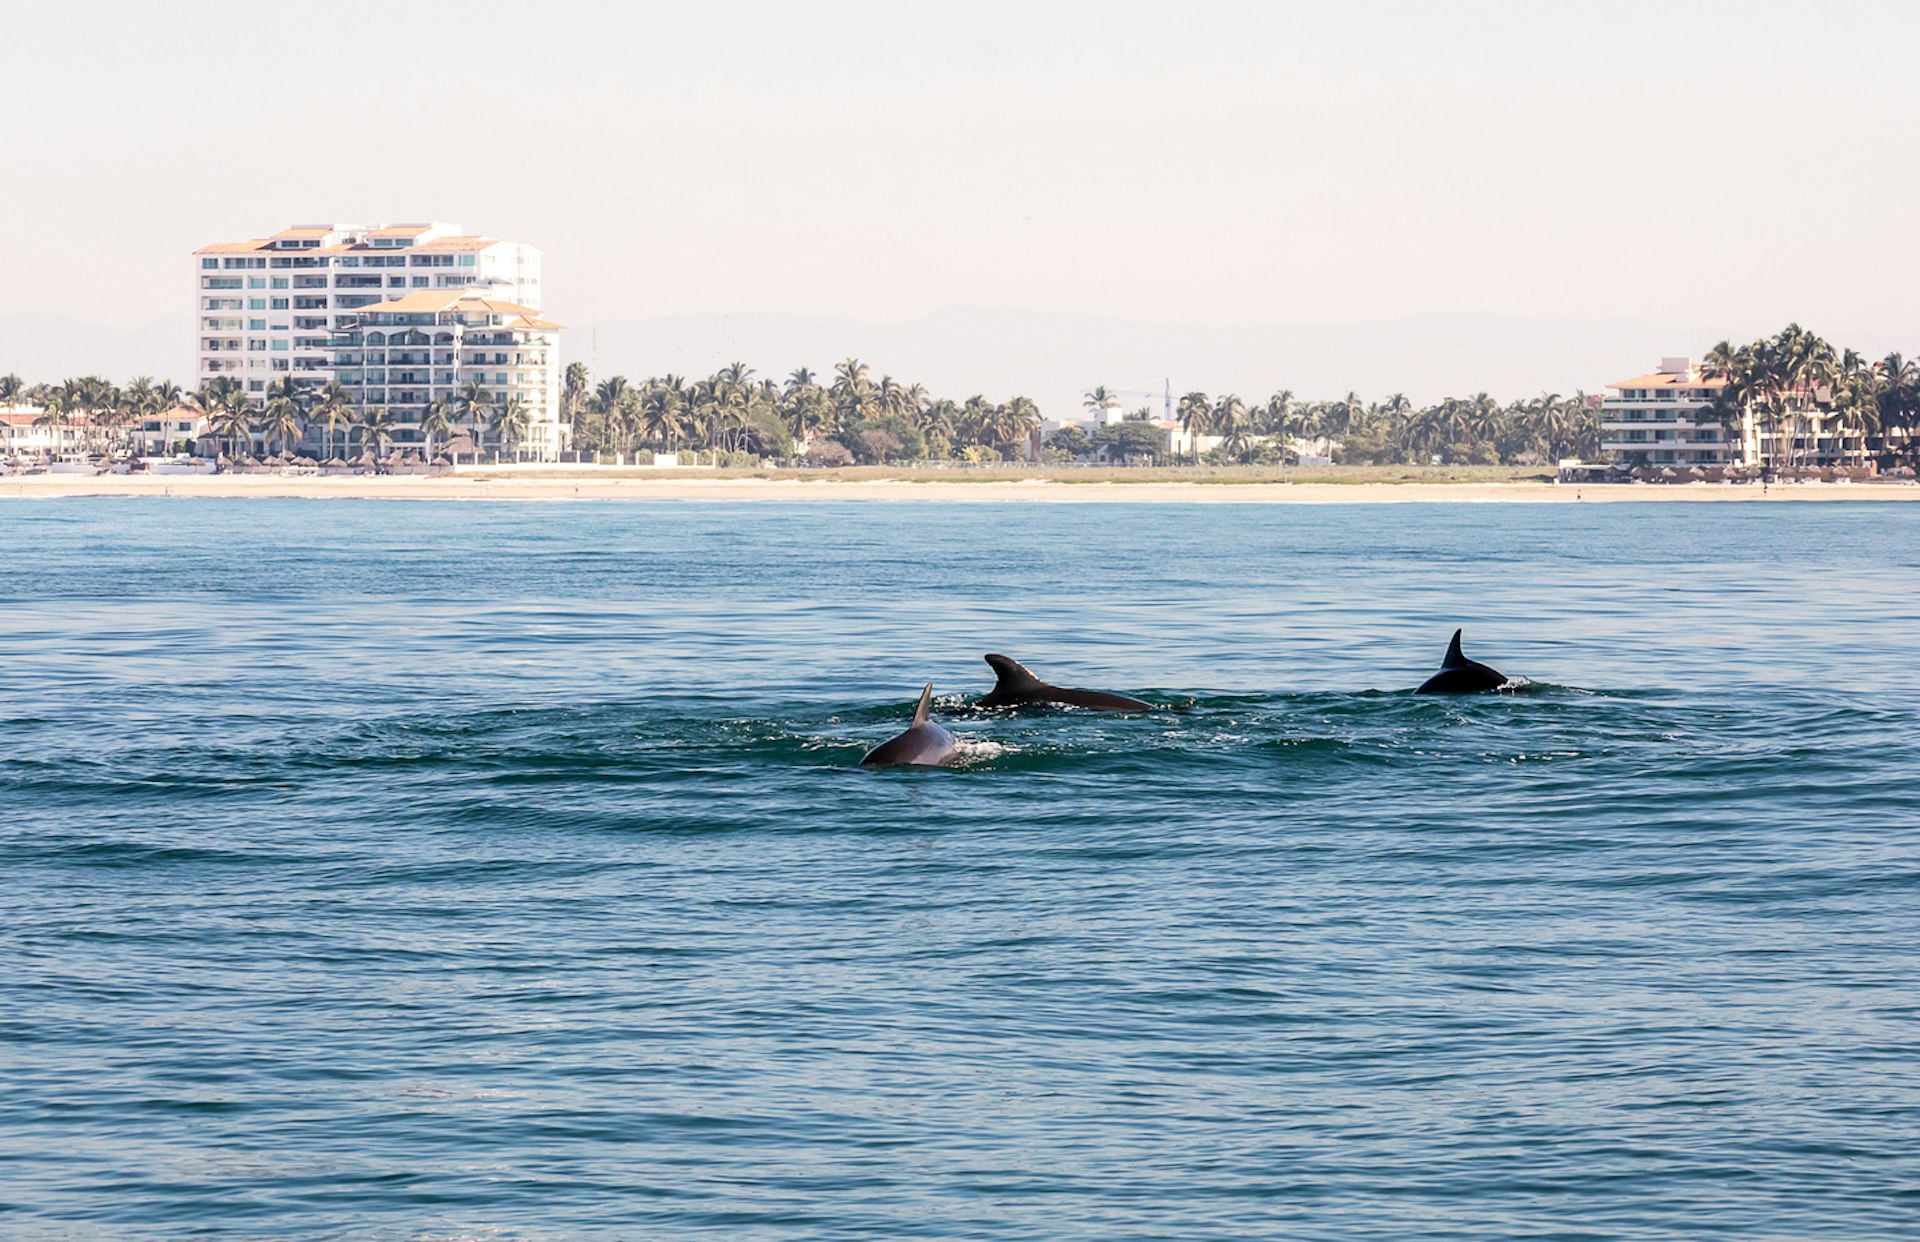 Dolphins swimming in the ocean near the coastal town of Puerto Vallarta